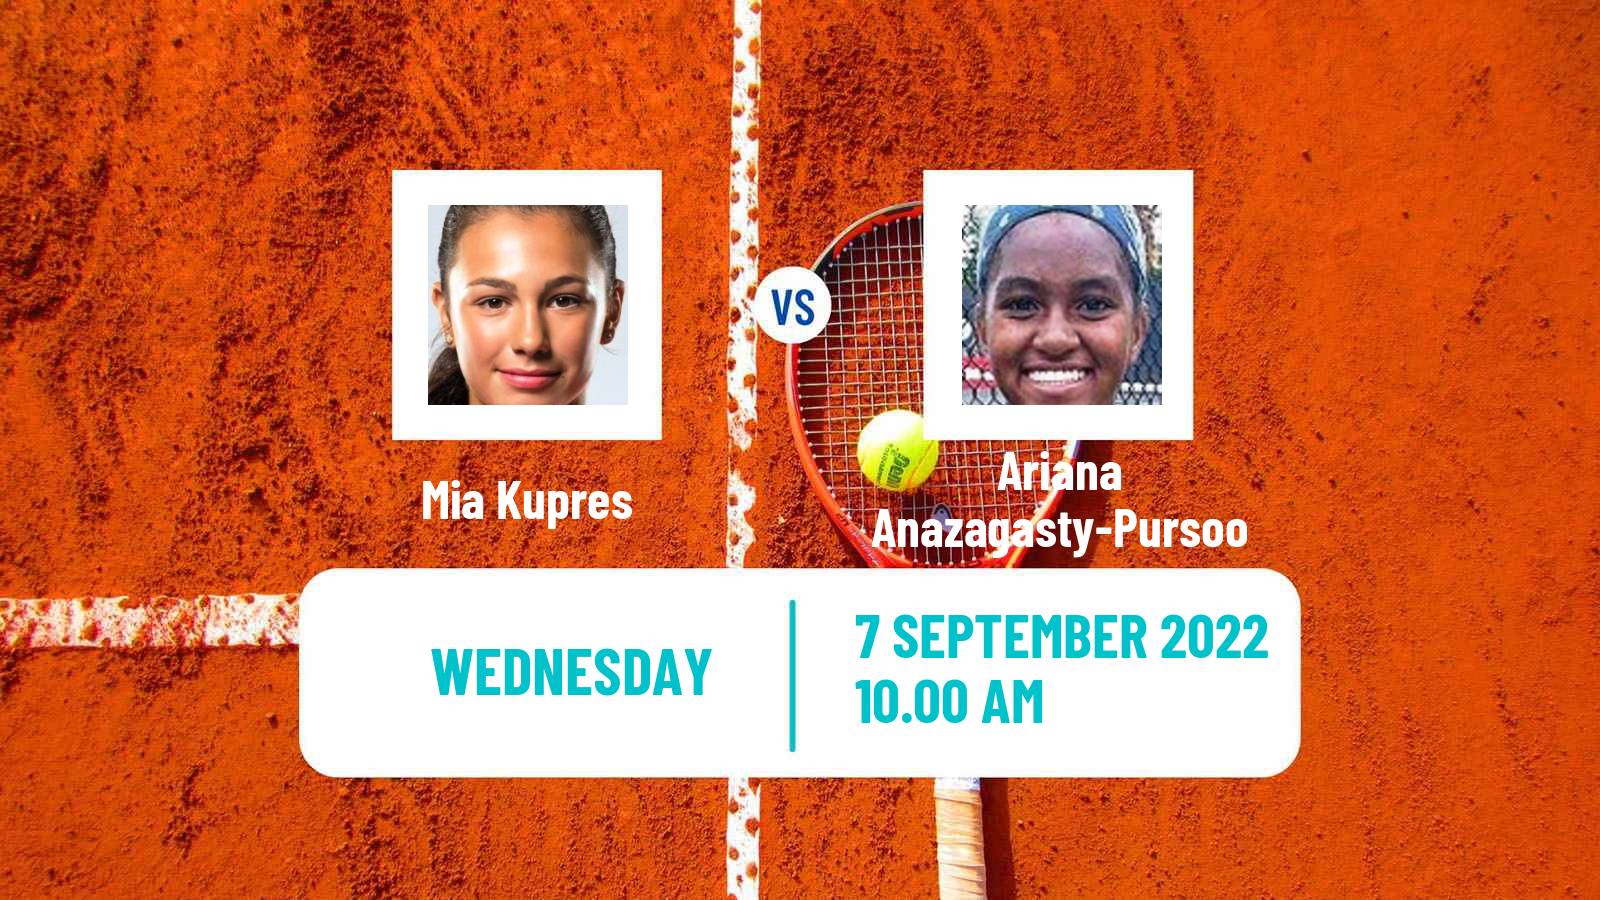 Tennis Girls Singles US Open Mia Kupres - Ariana Anazagasty-Pursoo